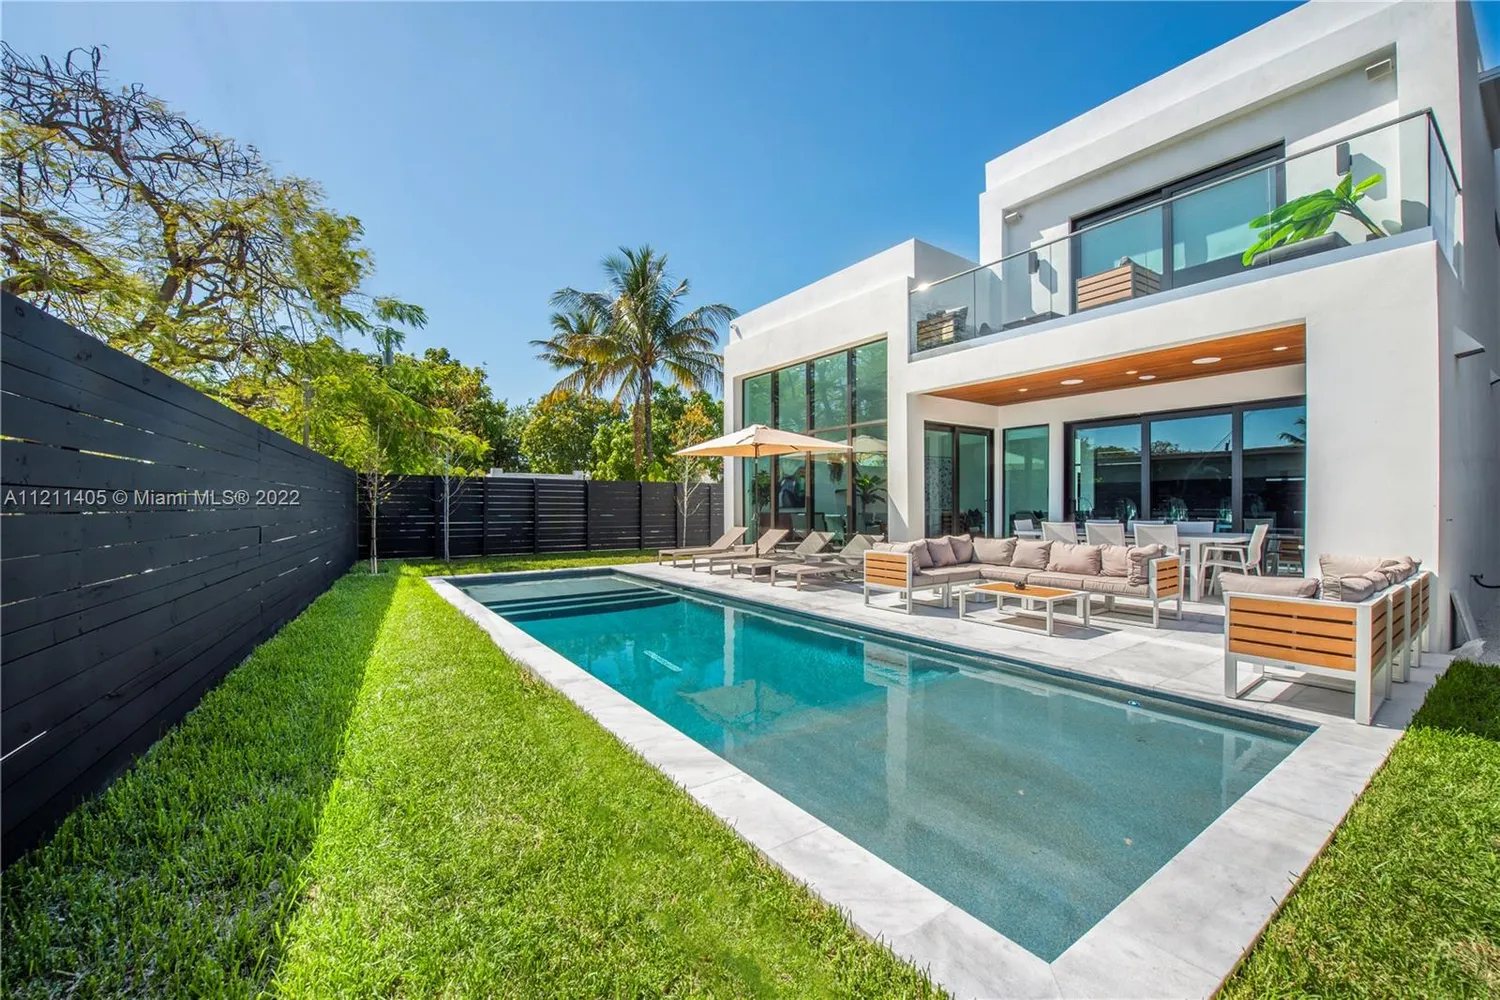 102 NE 50th Street modern Miami home